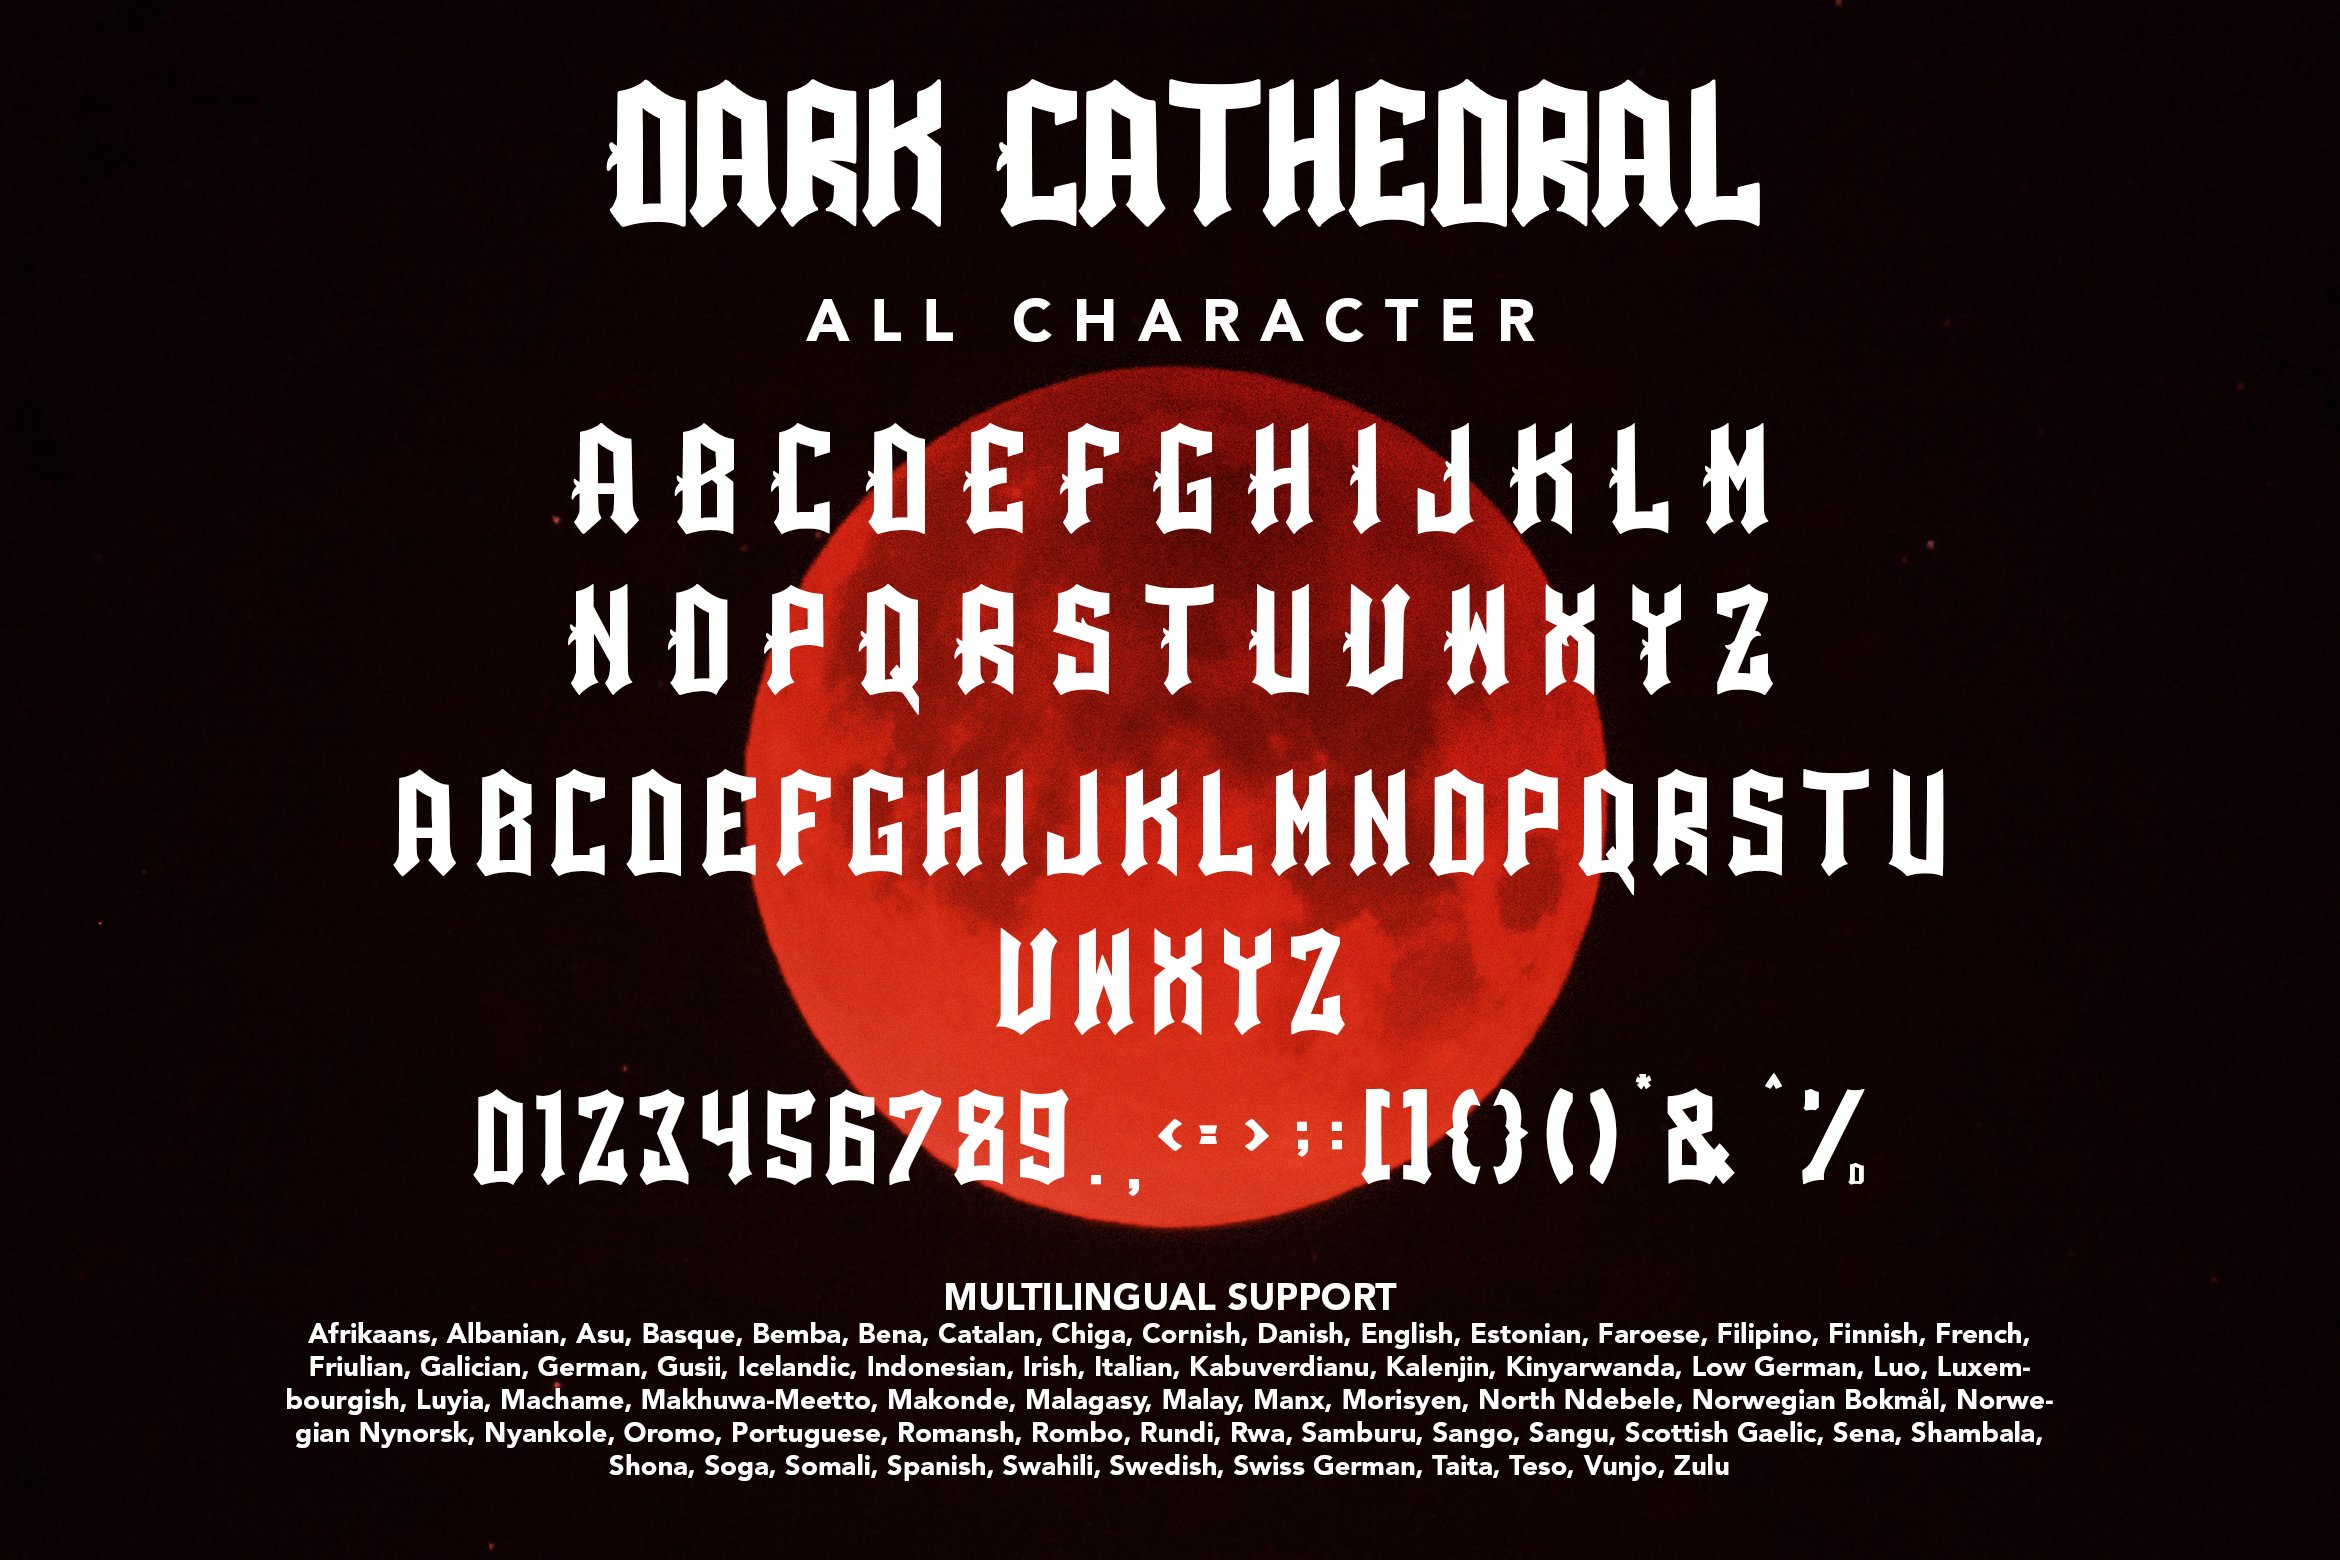 dark cathedral 7 569